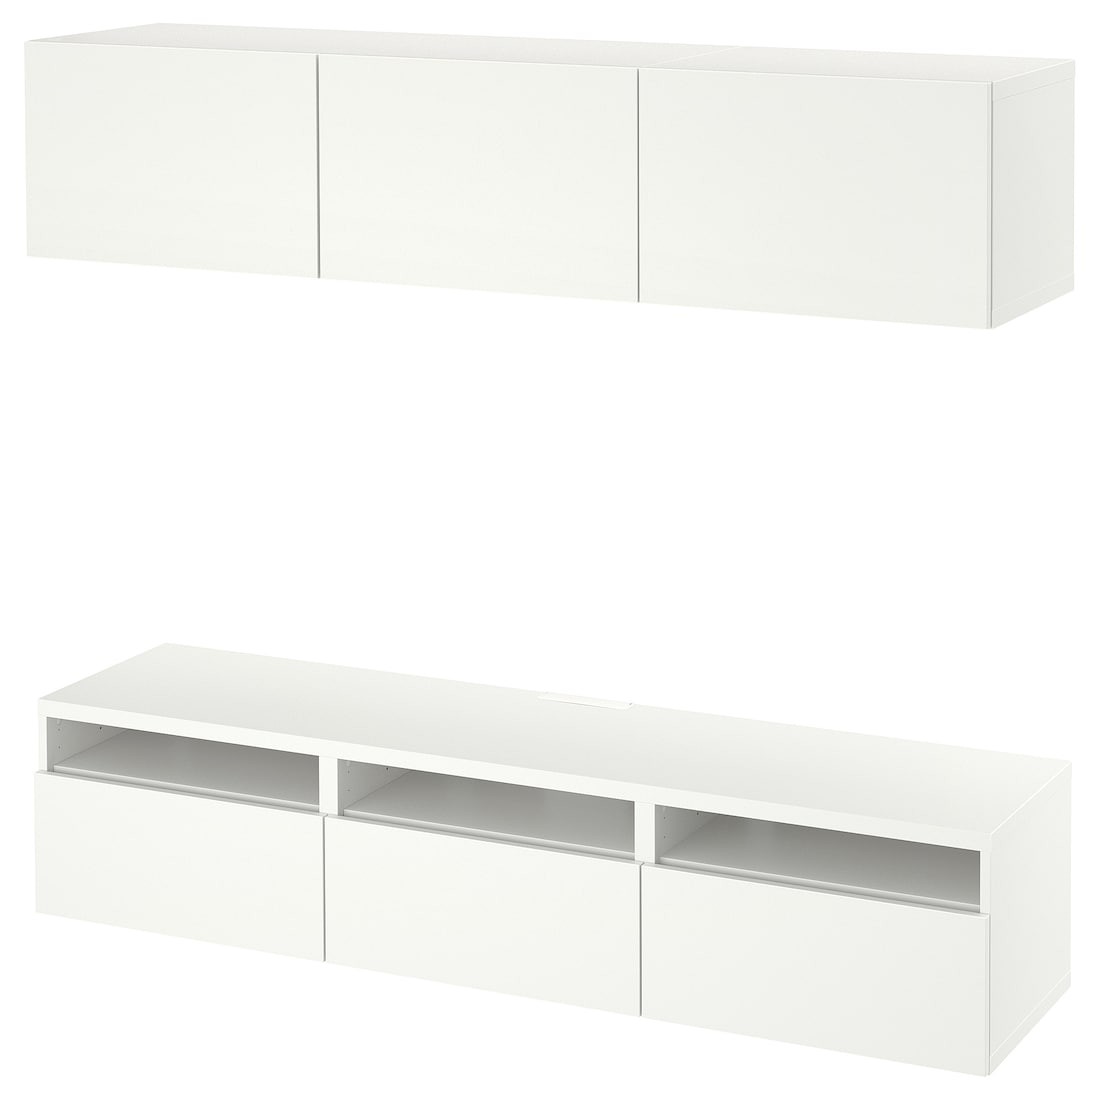 IKEA BESTÅ БЕСТО Тумба под ТВ, белый / Lappviken белый, 180x42x185 см 49476770 494.767.70